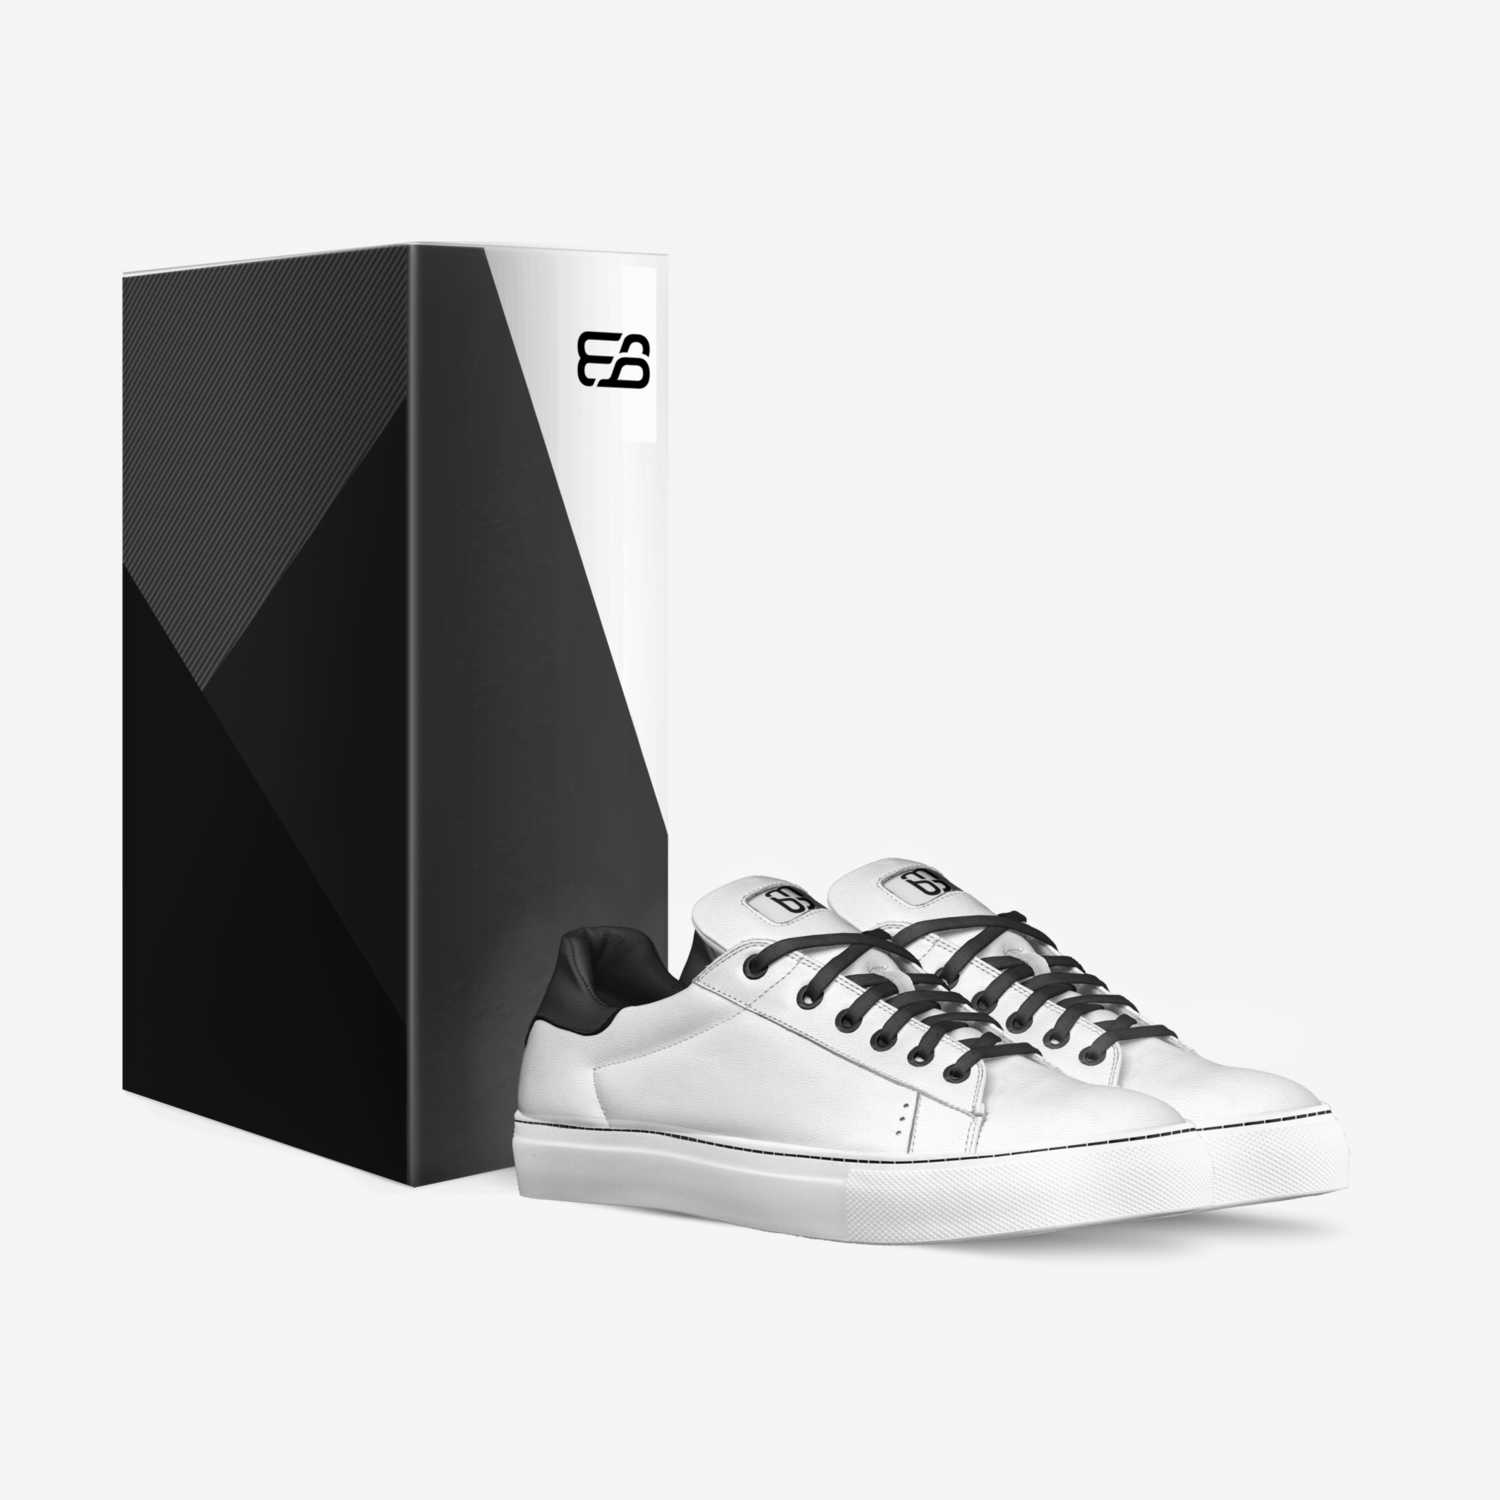 MYBESTBRANDS custom made in Italy shoes by Roh Bertah | Box view